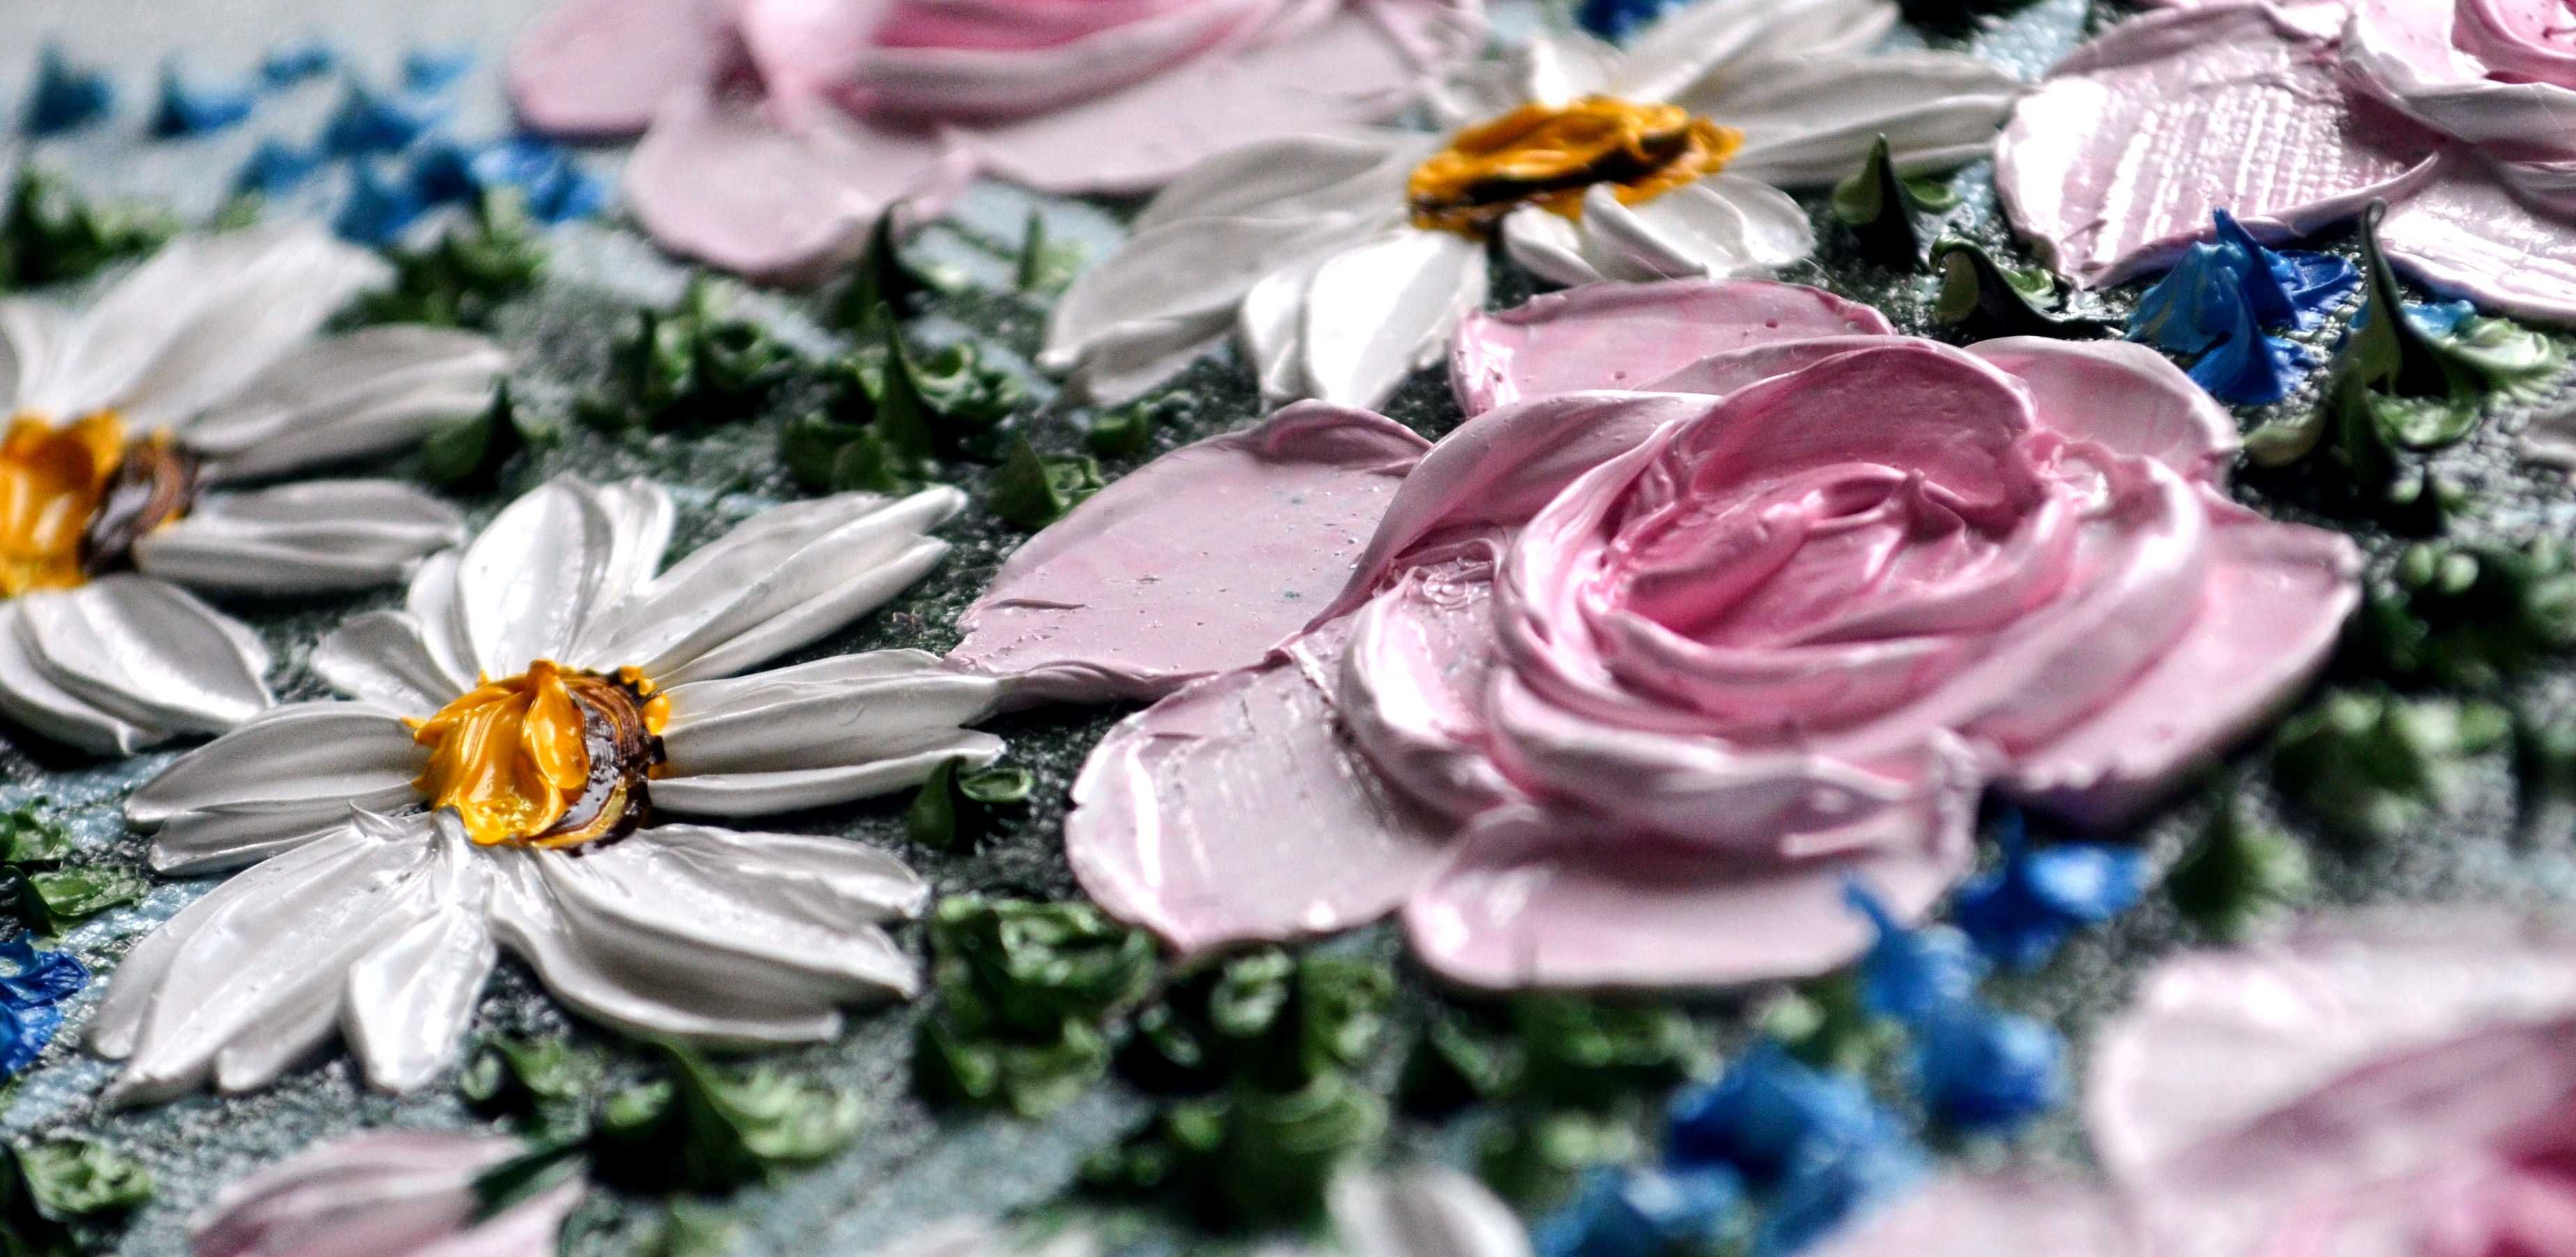 Картина маслом "Букет рожевих троянд" живопис Натюрморт ромашки Цветы